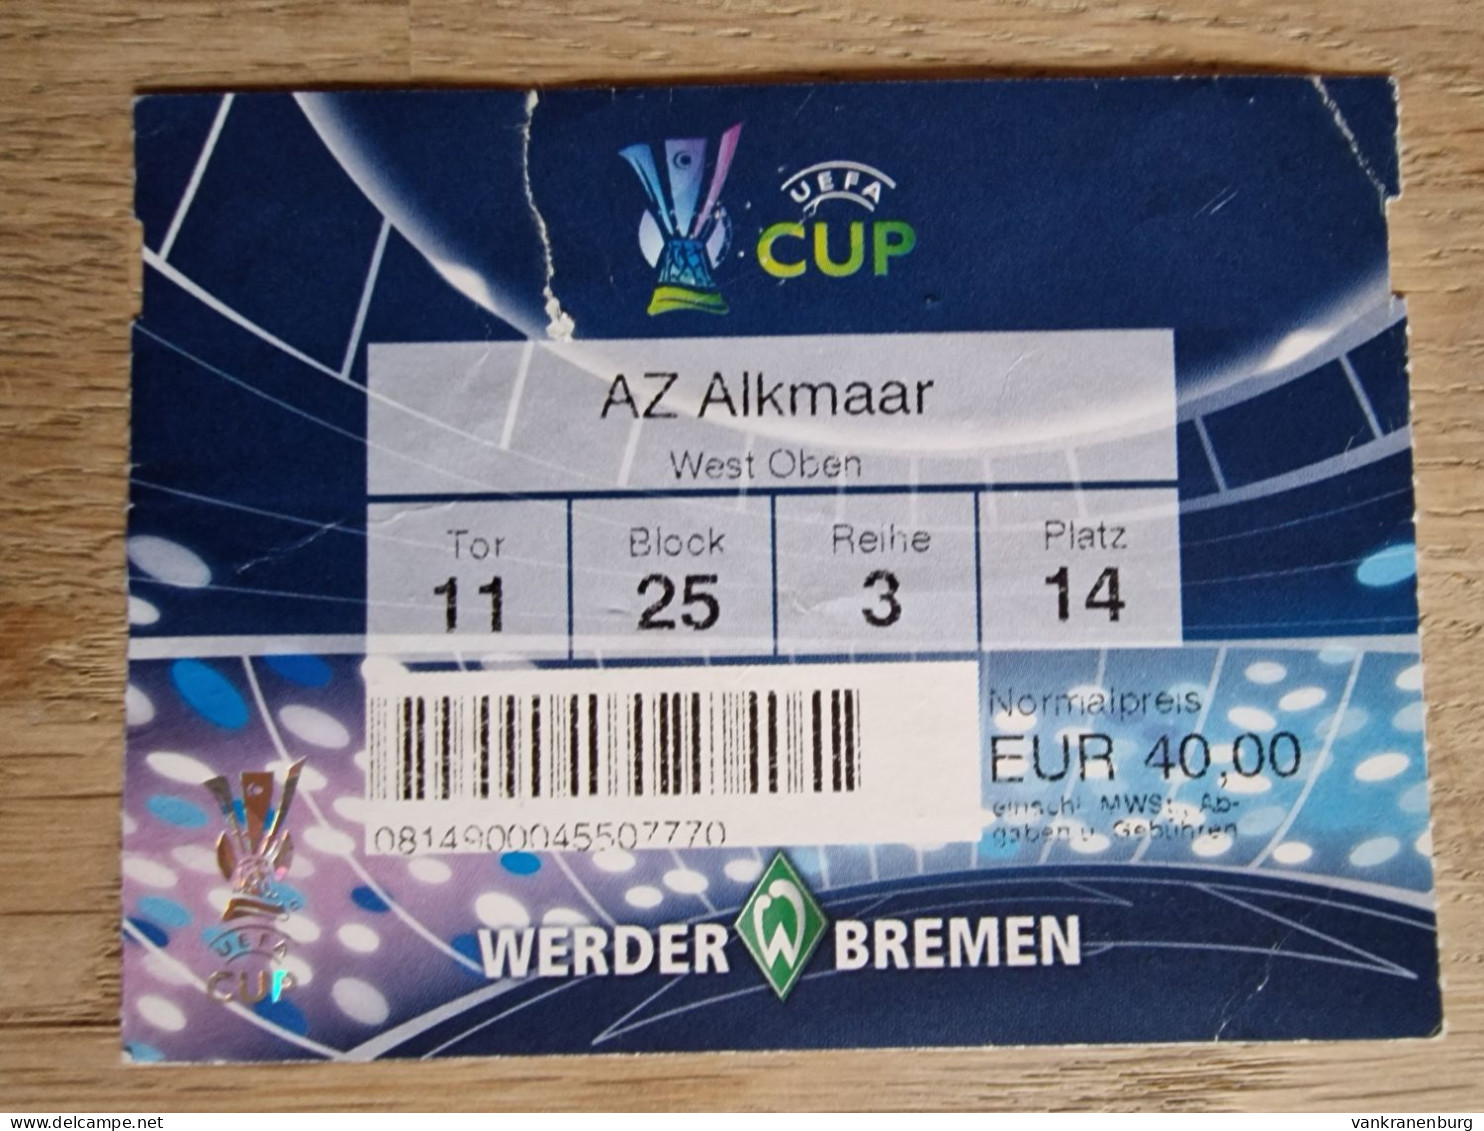 Ticket - Werder Bremen - AZ Alkmaar - 12.4.2007 - UEFA Cup - Football Soccer Fussball Calcio - Tickets D'entrée